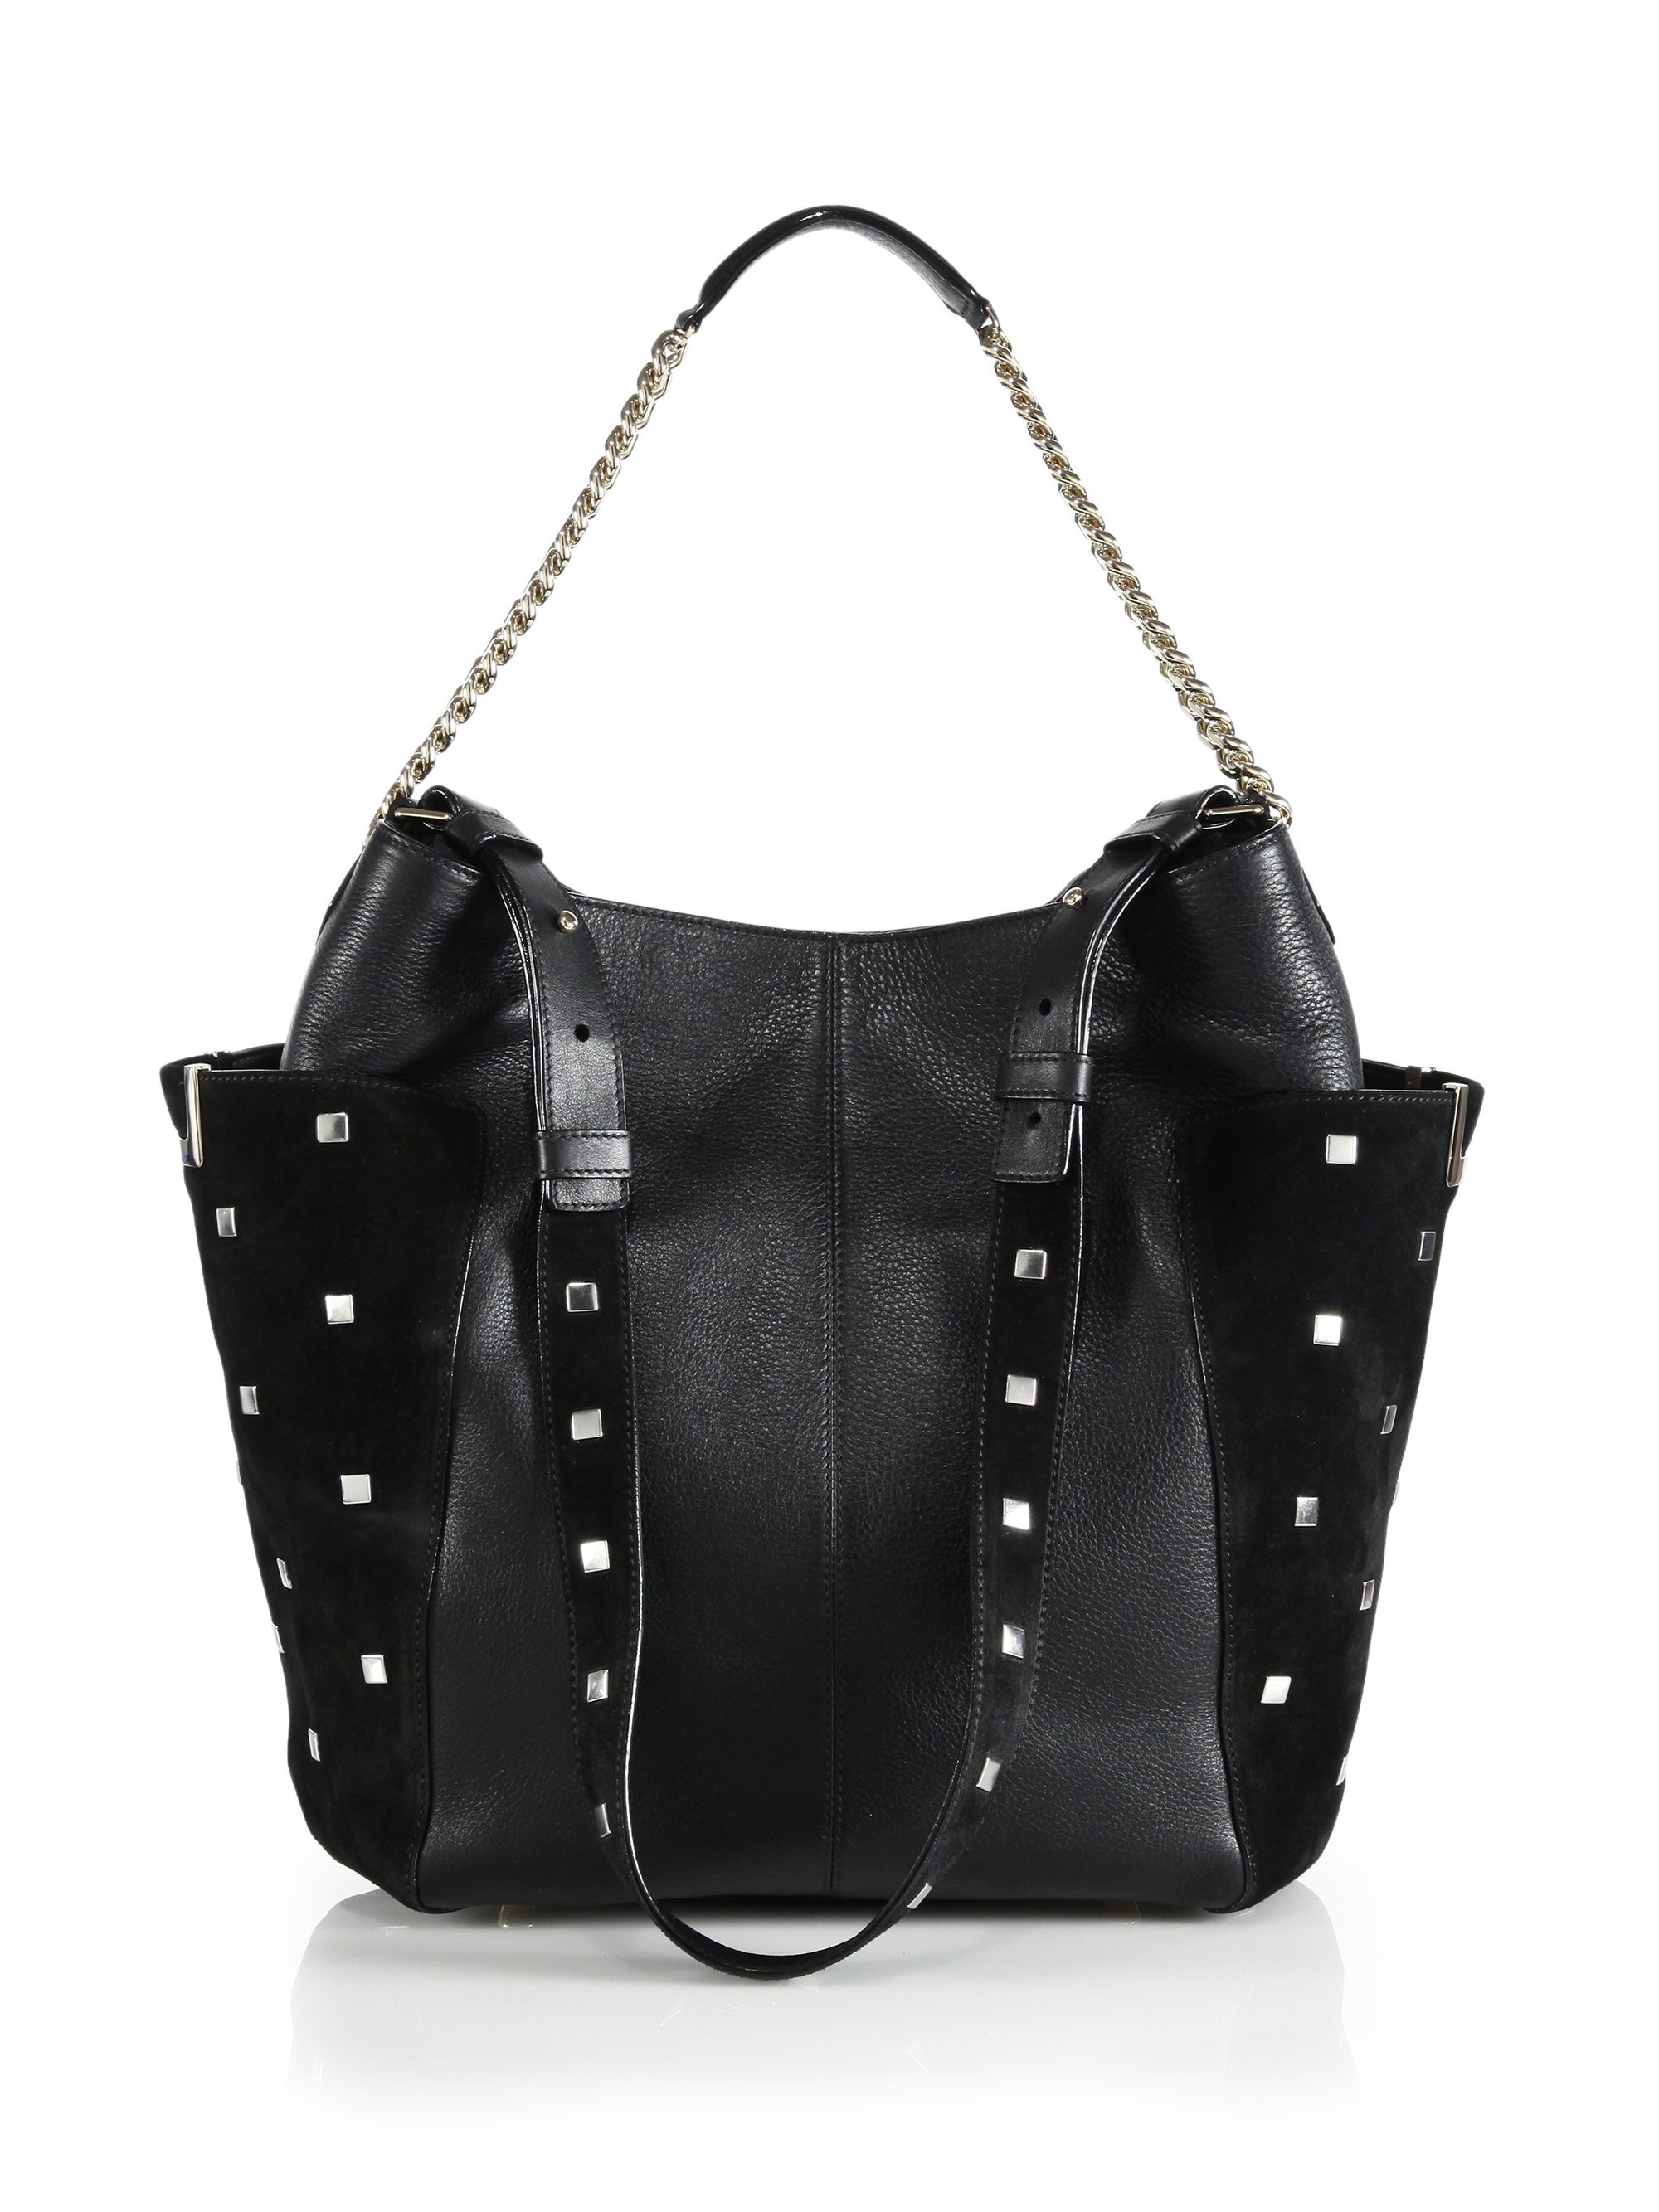 Jimmy choo Anna Studded Leather & Suede Shoulder Bag in Black | Lyst